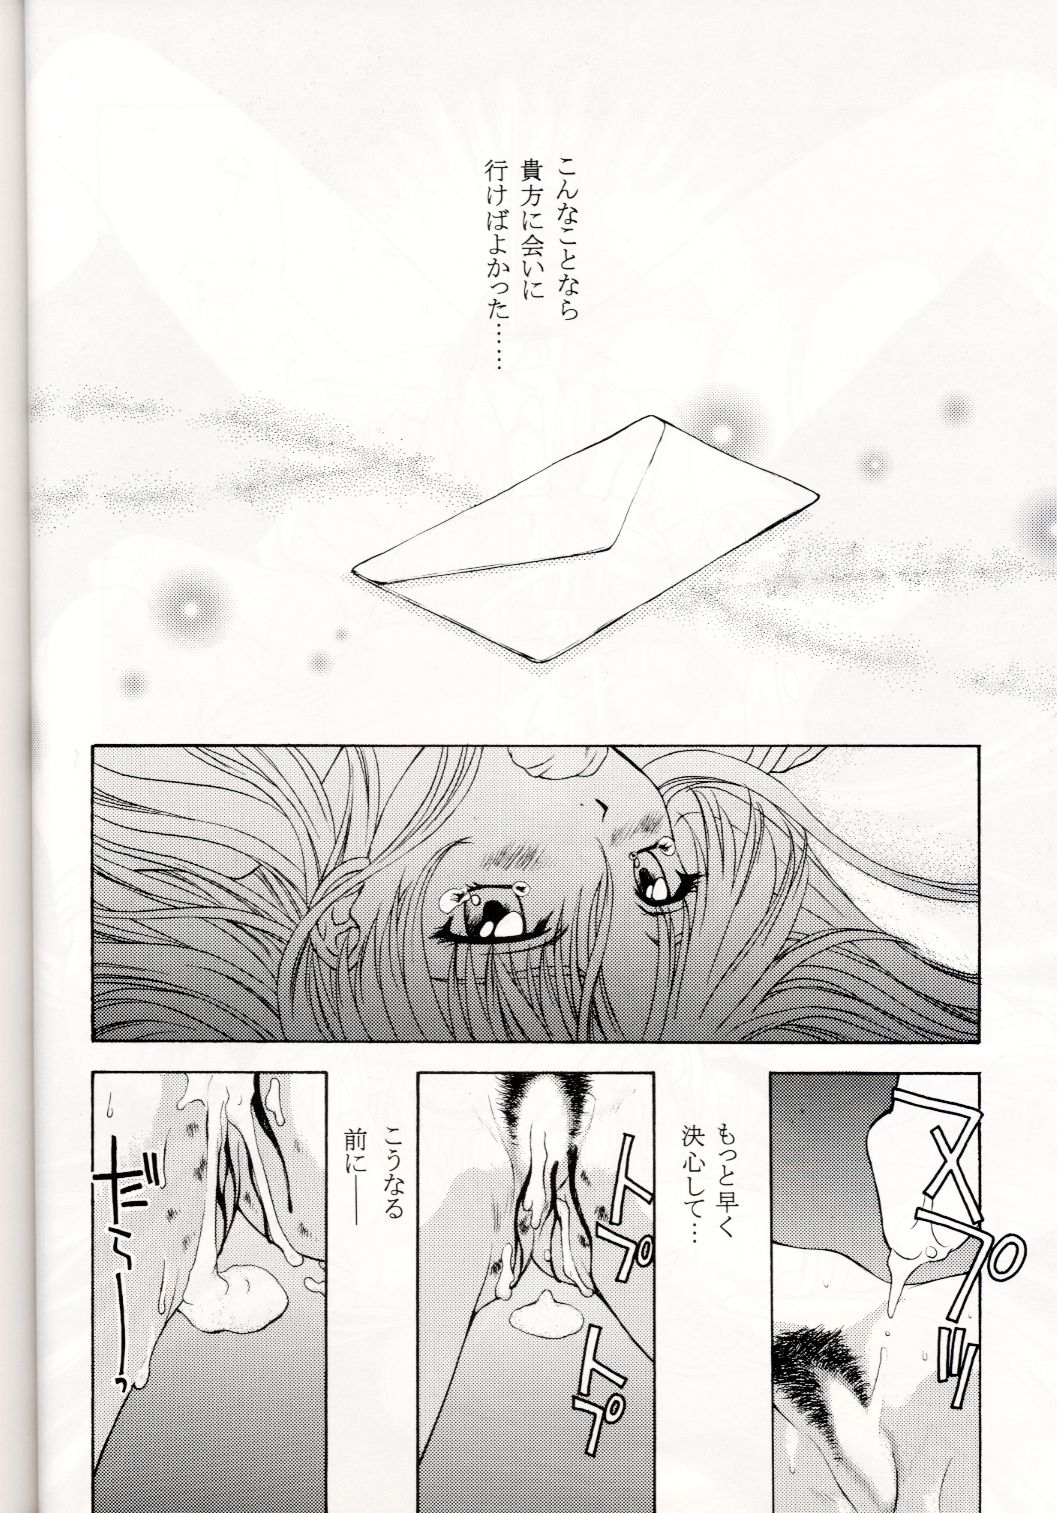 (C53) [Secret Society M (Kitahara Aki)] Sentimental Flowers (C53) [秘密結社M (北原亜希)] Sentimental Flowers